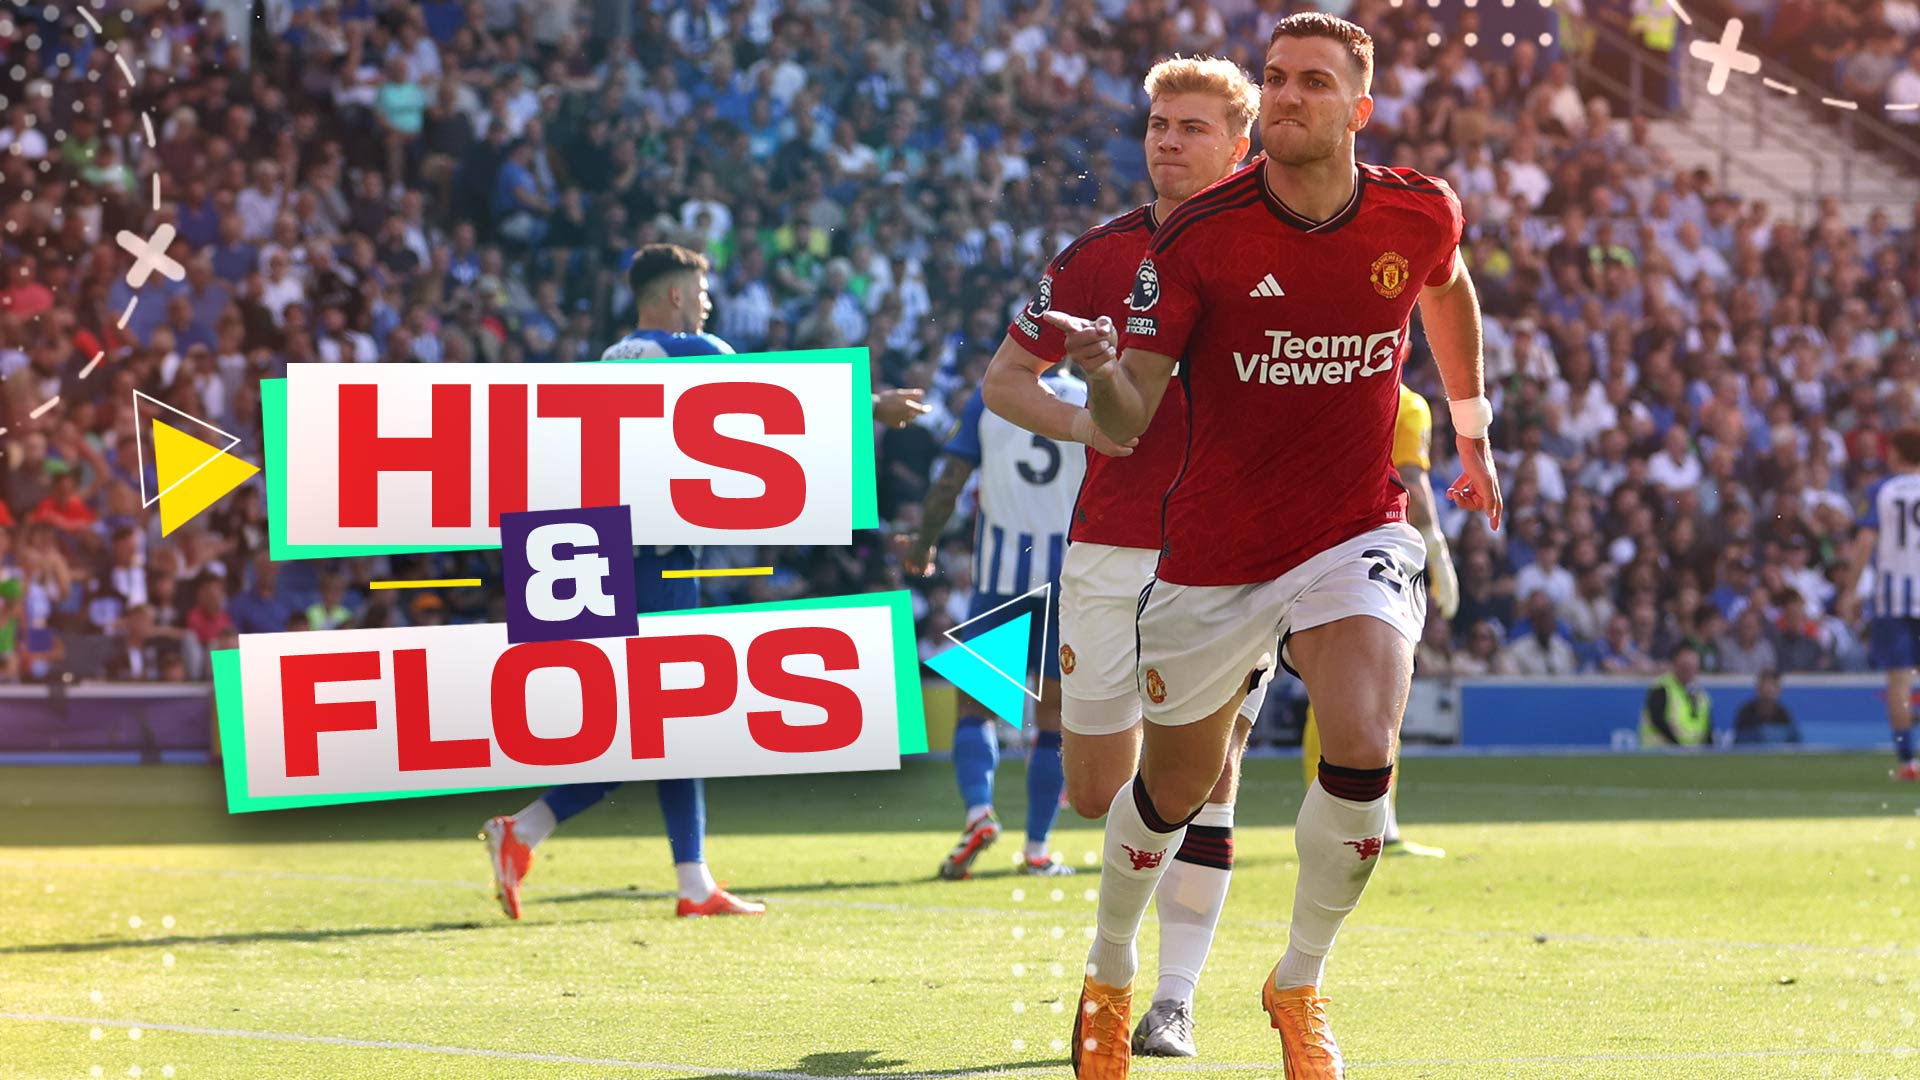 Hits & Flops: Brighton vs Man United